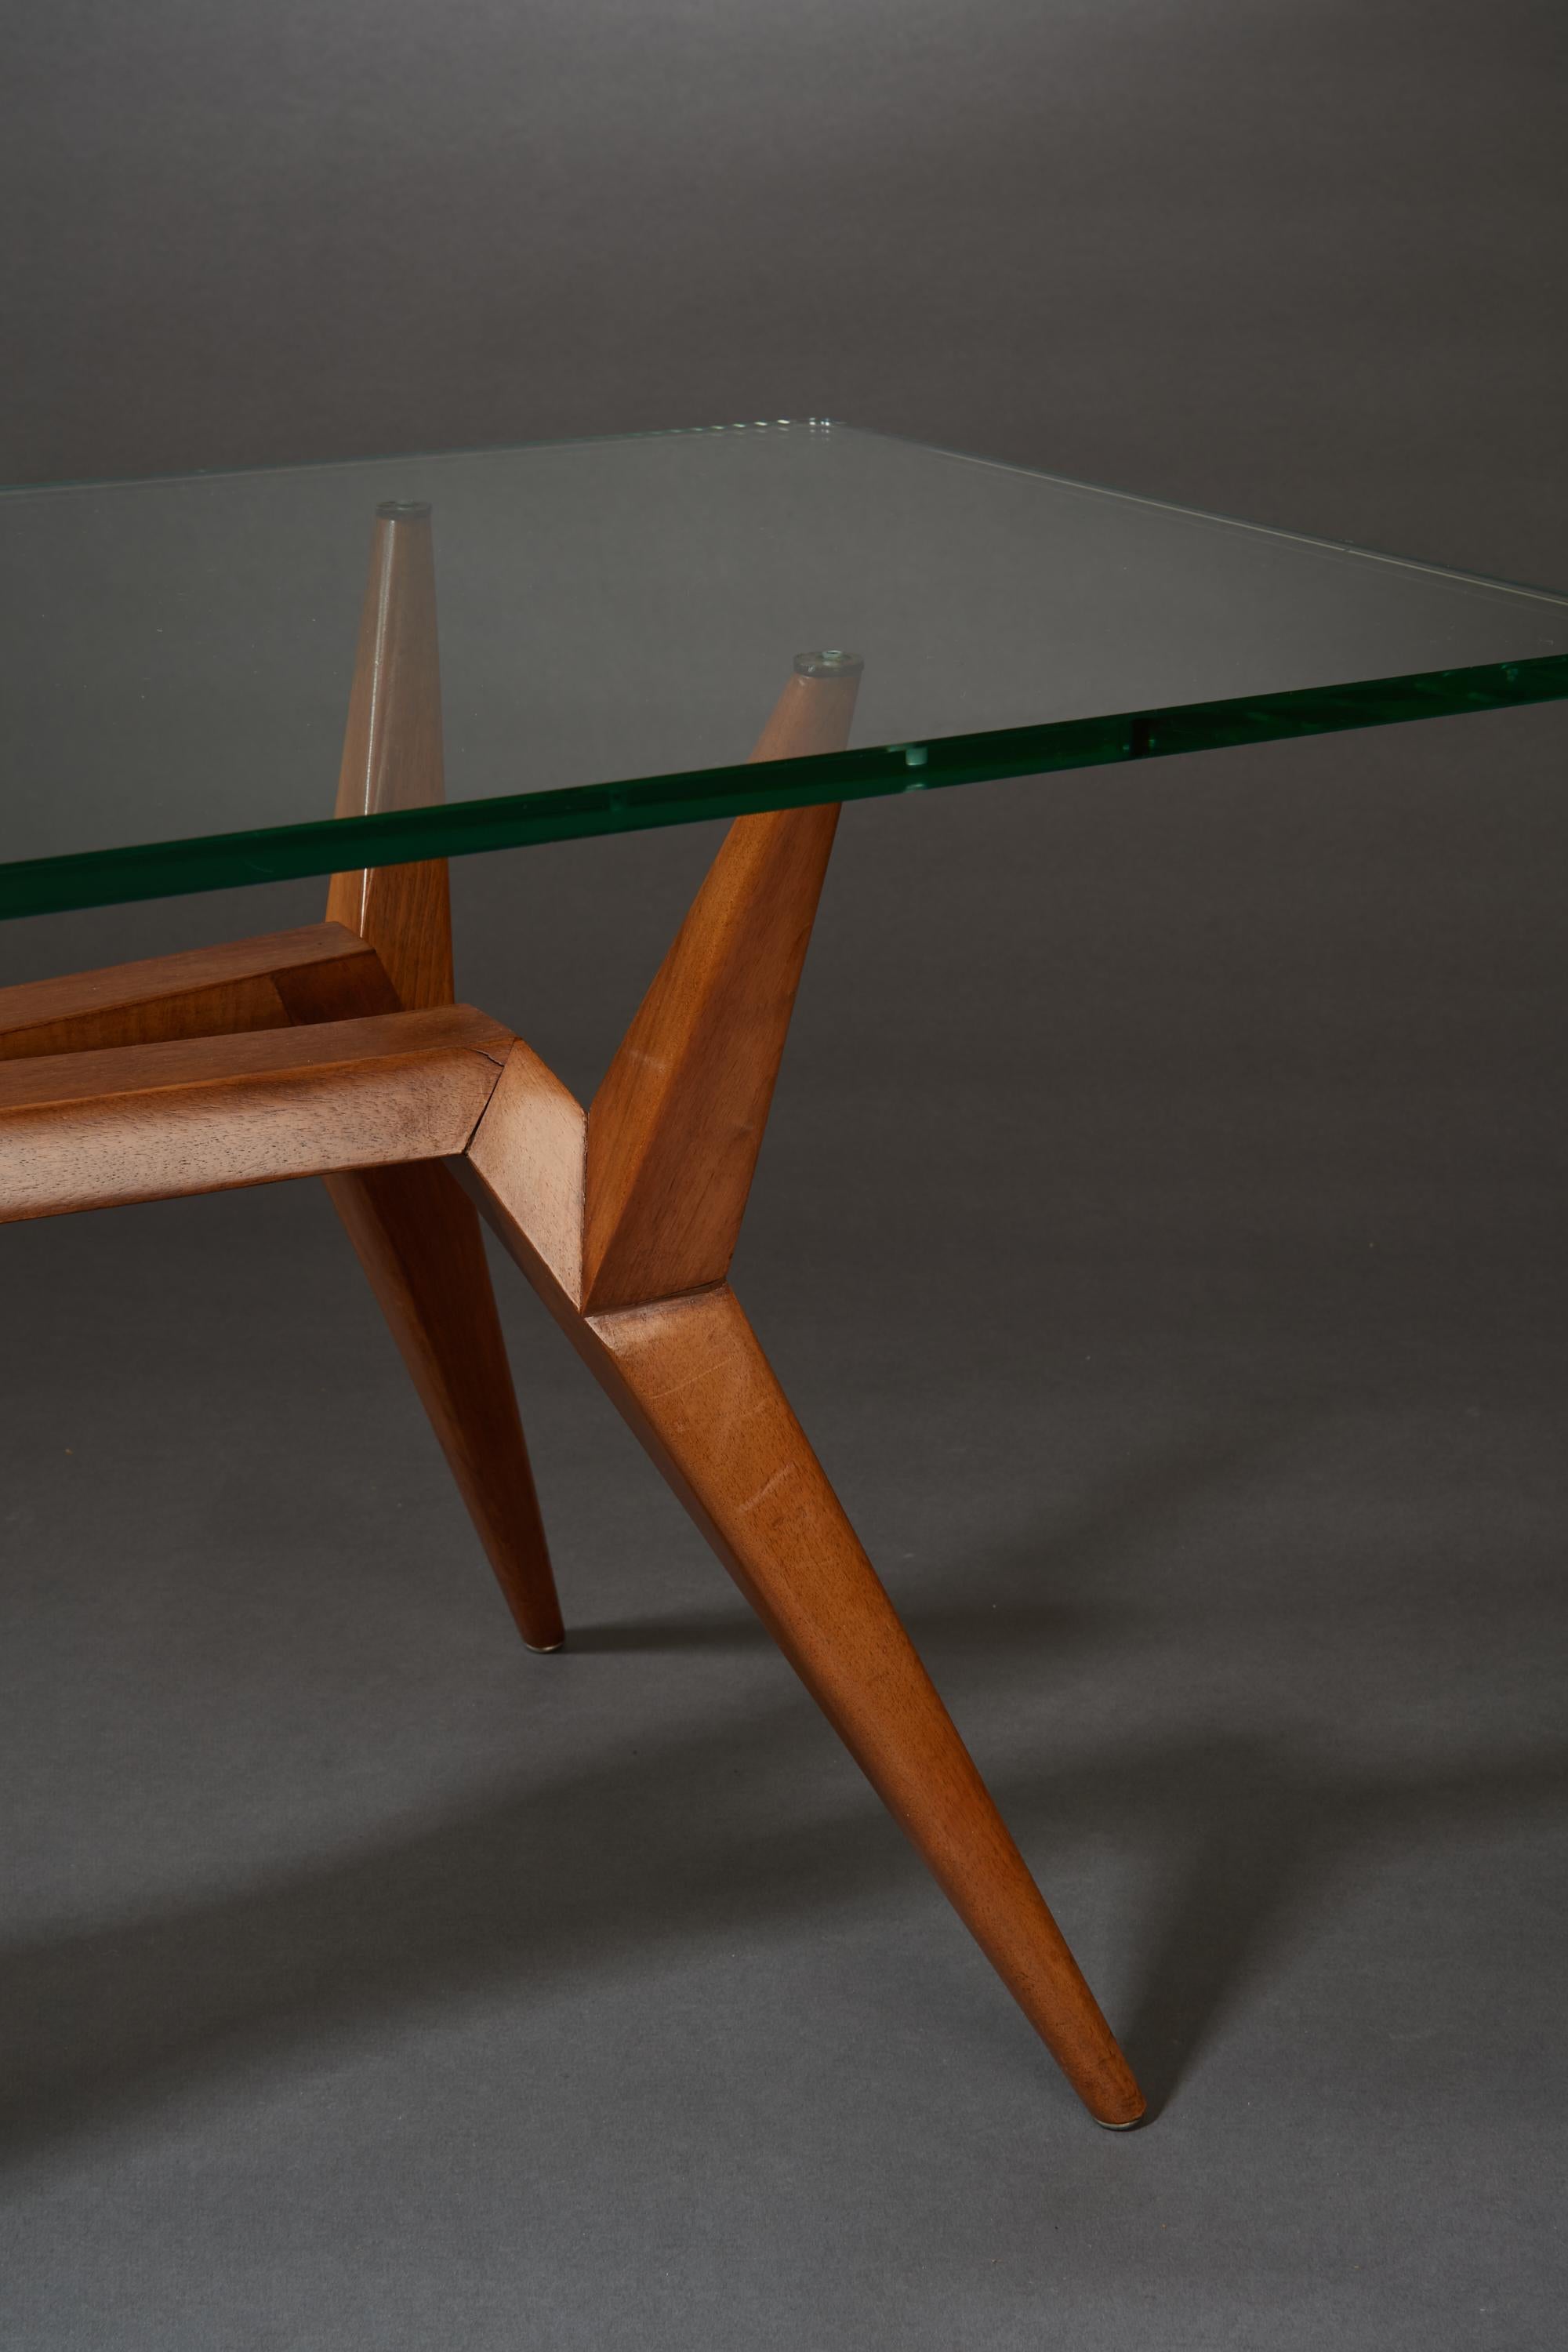 Pierluigi Giordani Rare Constructivist Coffee Table in Wood & Glass, Italy 1950s For Sale 2